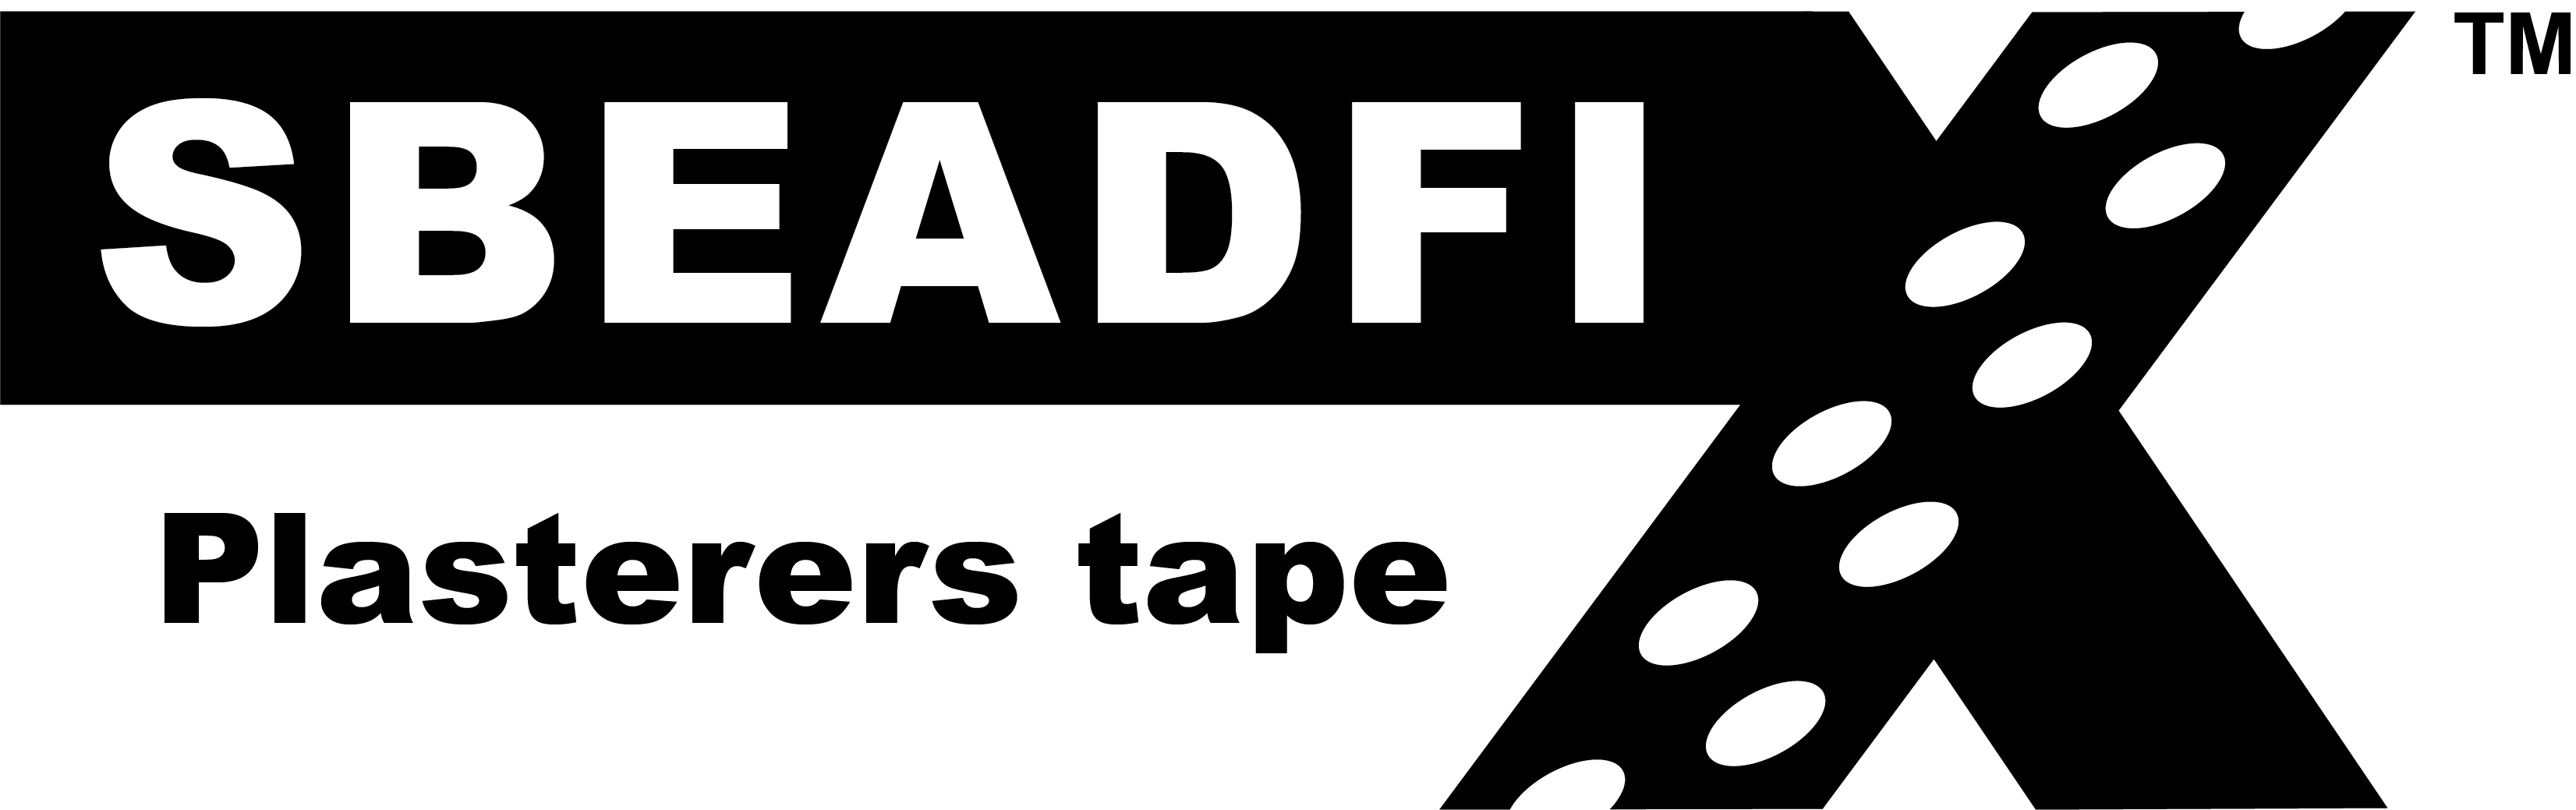 sbeadfix logo.png